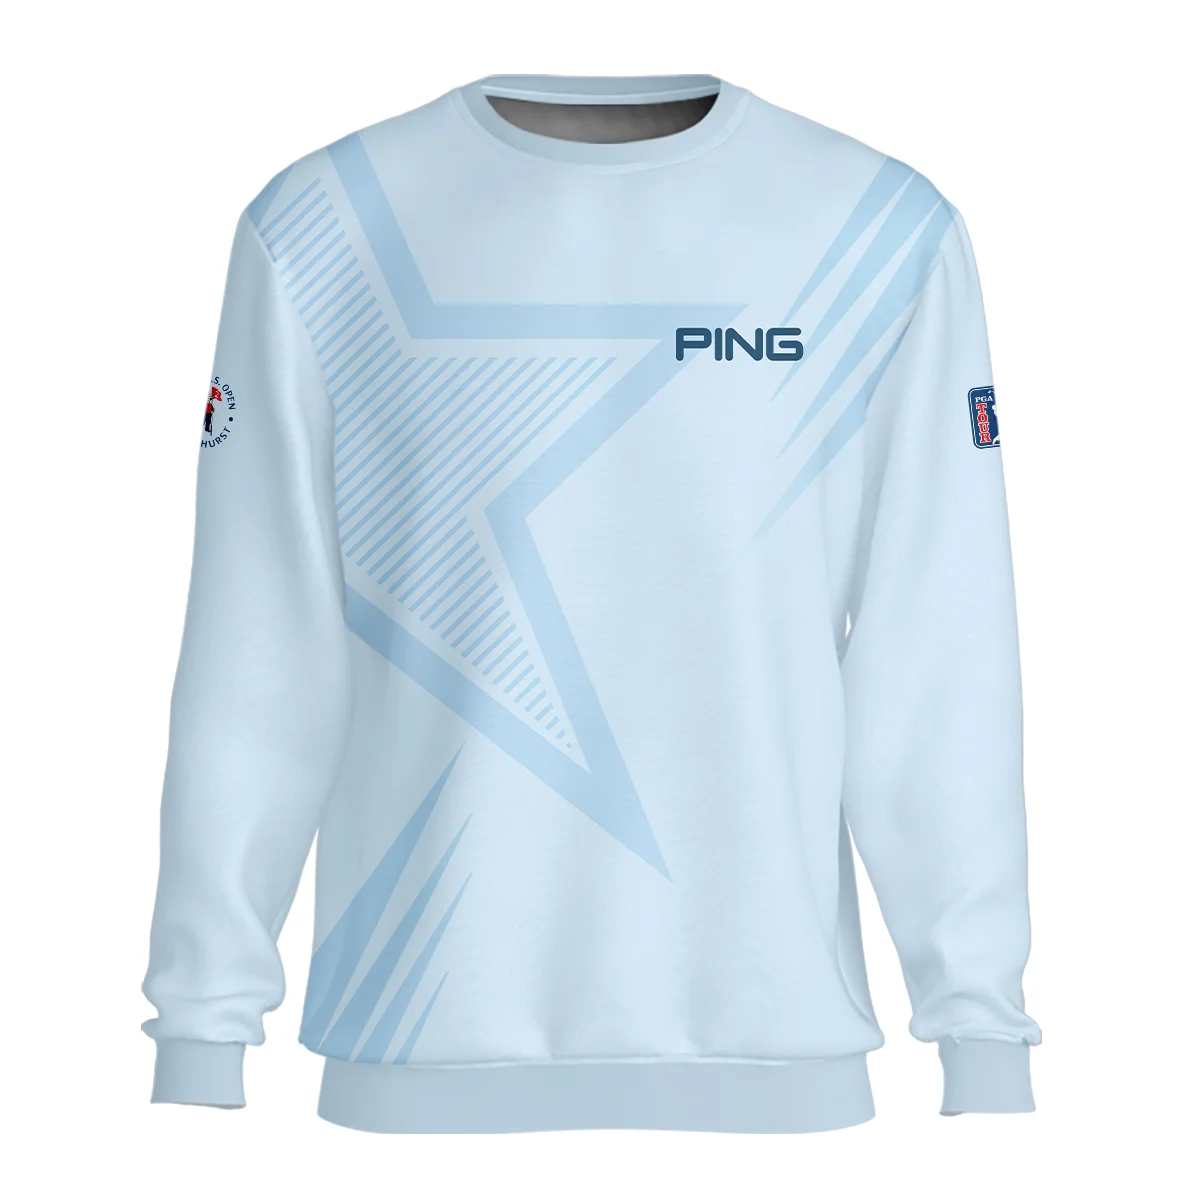 124th U.S. Open Pinehurst Golf Star Line Pattern Light Blue Ping Unisex Sweatshirt Style Classic Sweatshirt